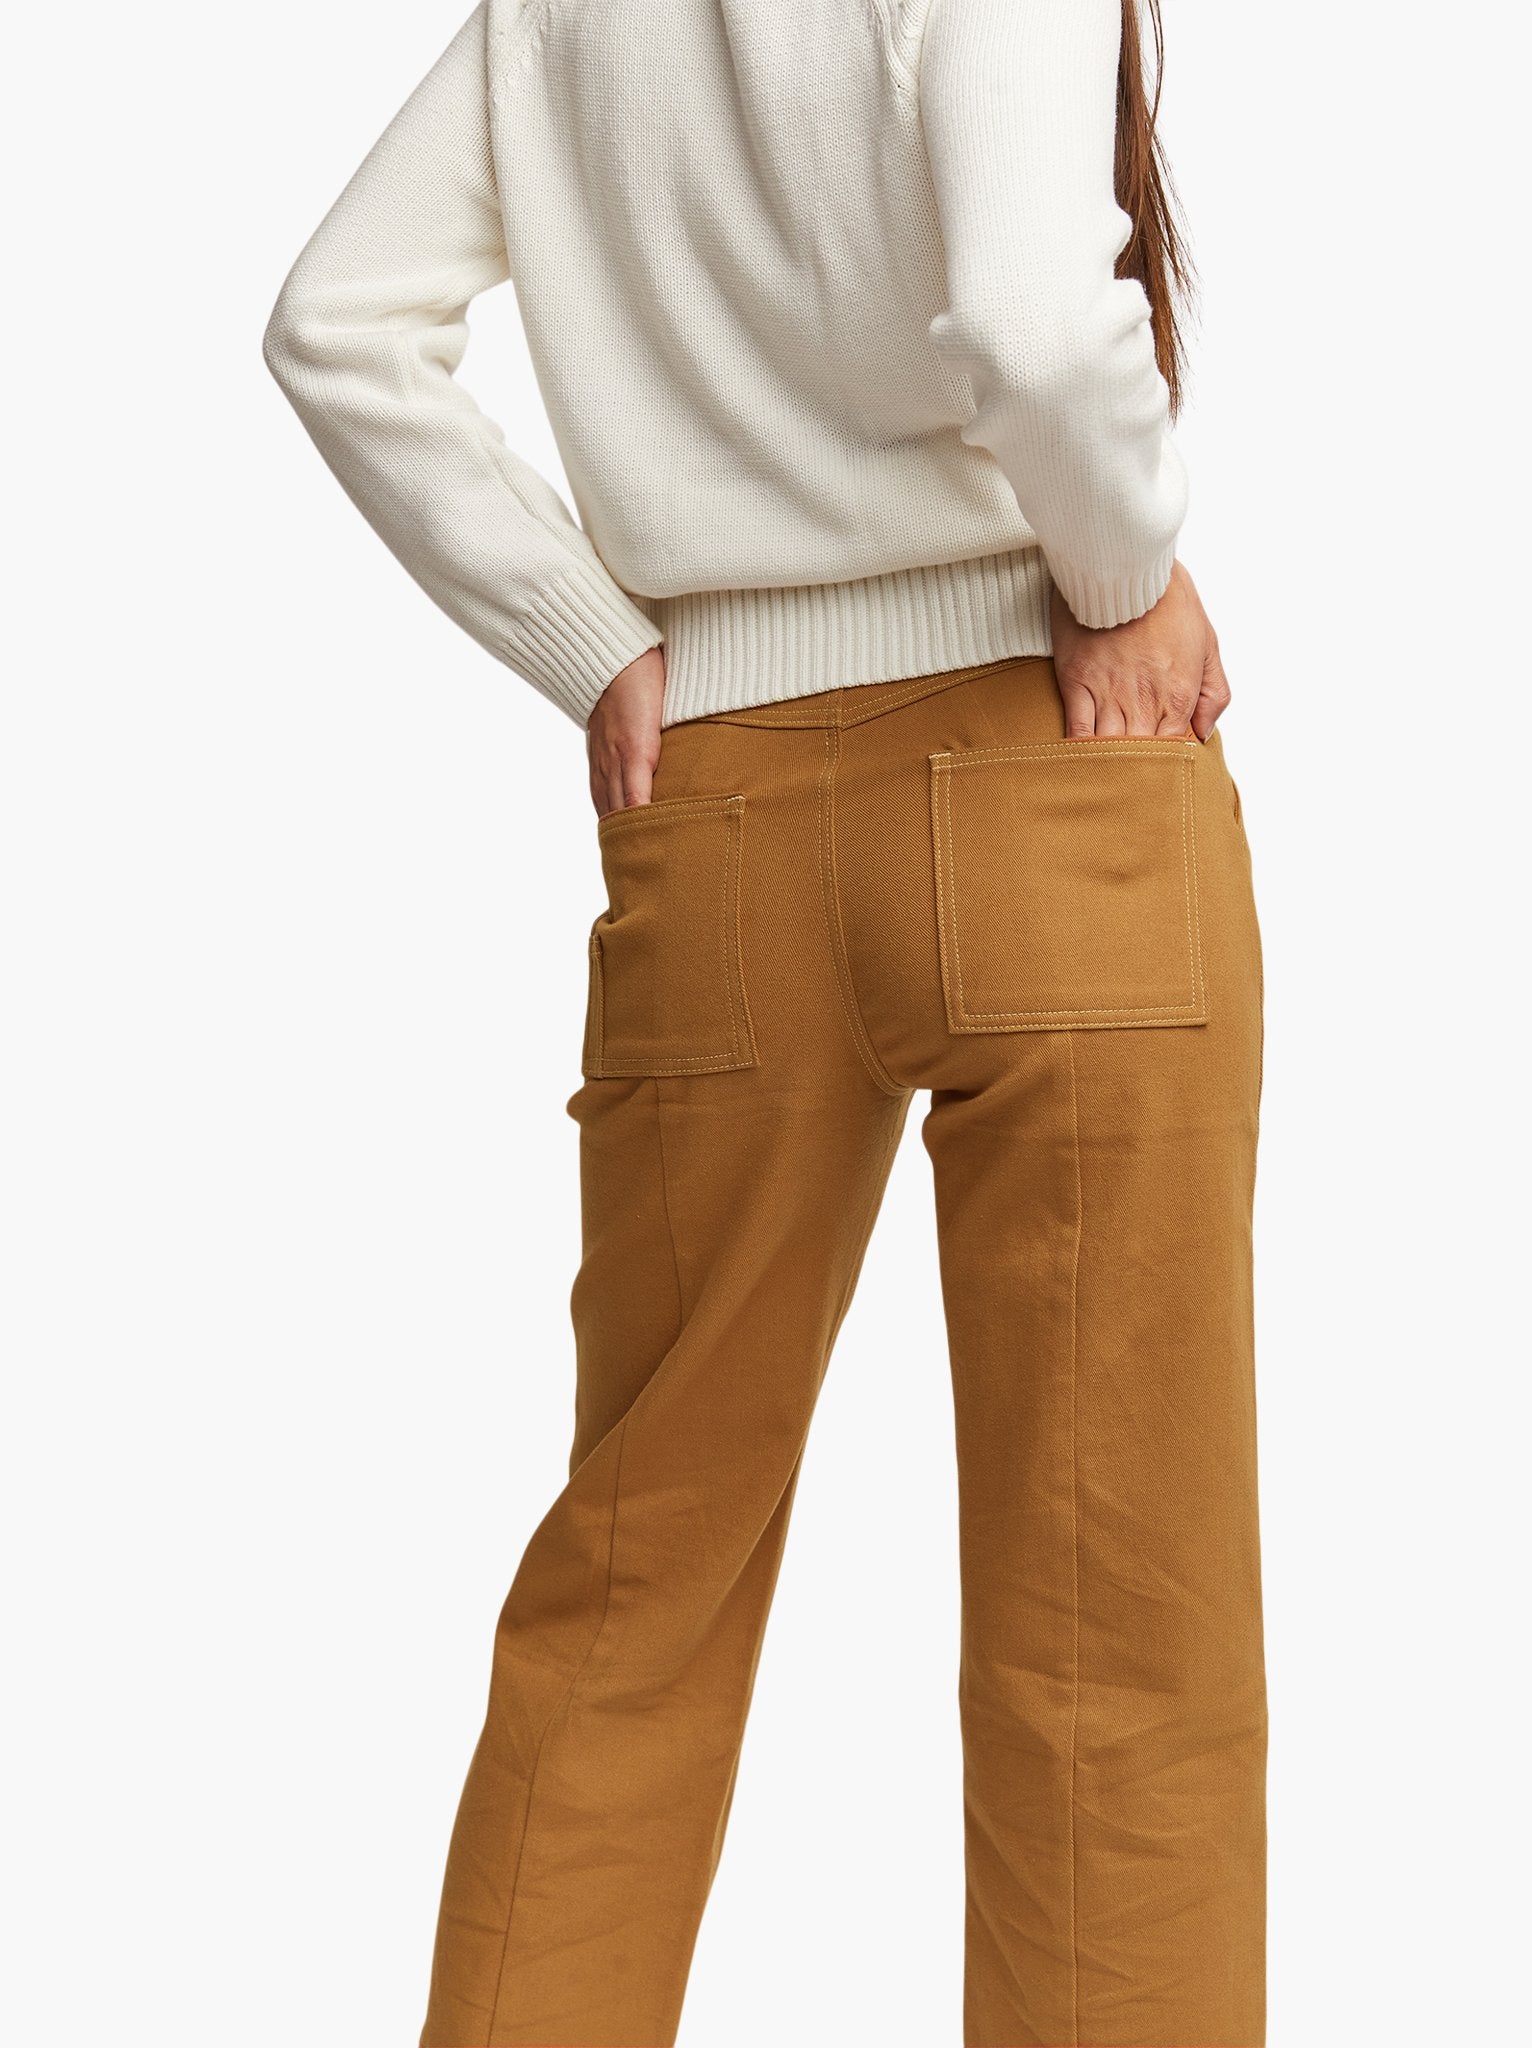 Buy Green Trousers & Pants for Women by FNOCKS Online | Ajio.com